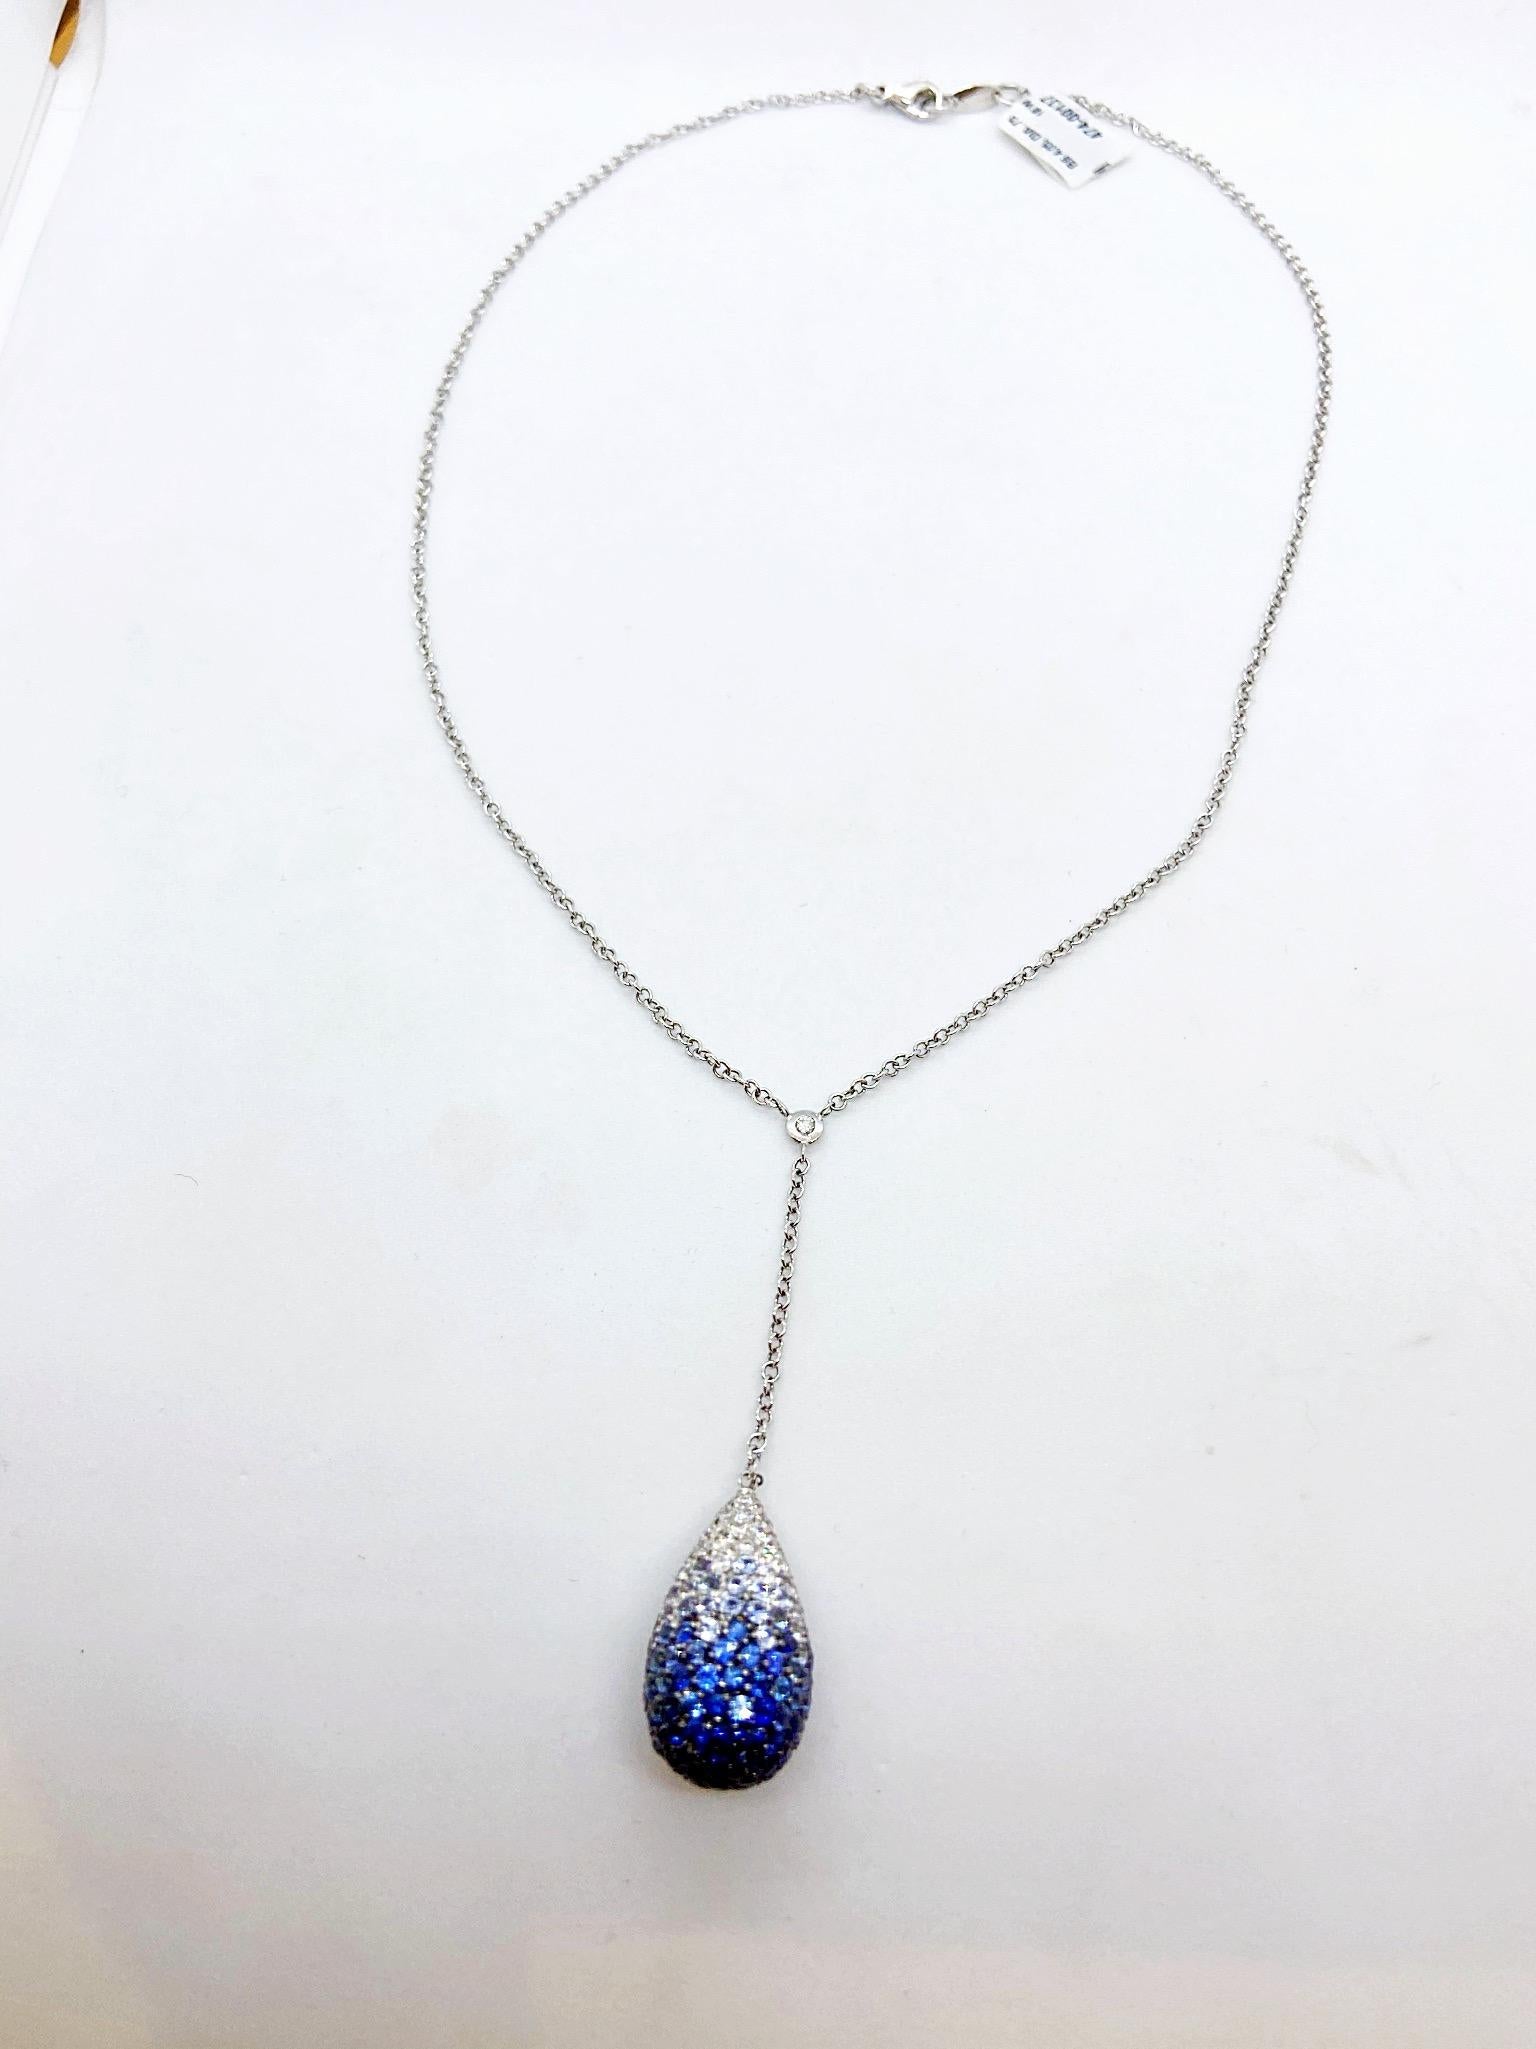 Modern Leo Pizzo White Gold Dew Drop Pendant 4.05Ct. Blue Sapphire & .75 Carat Diamond For Sale